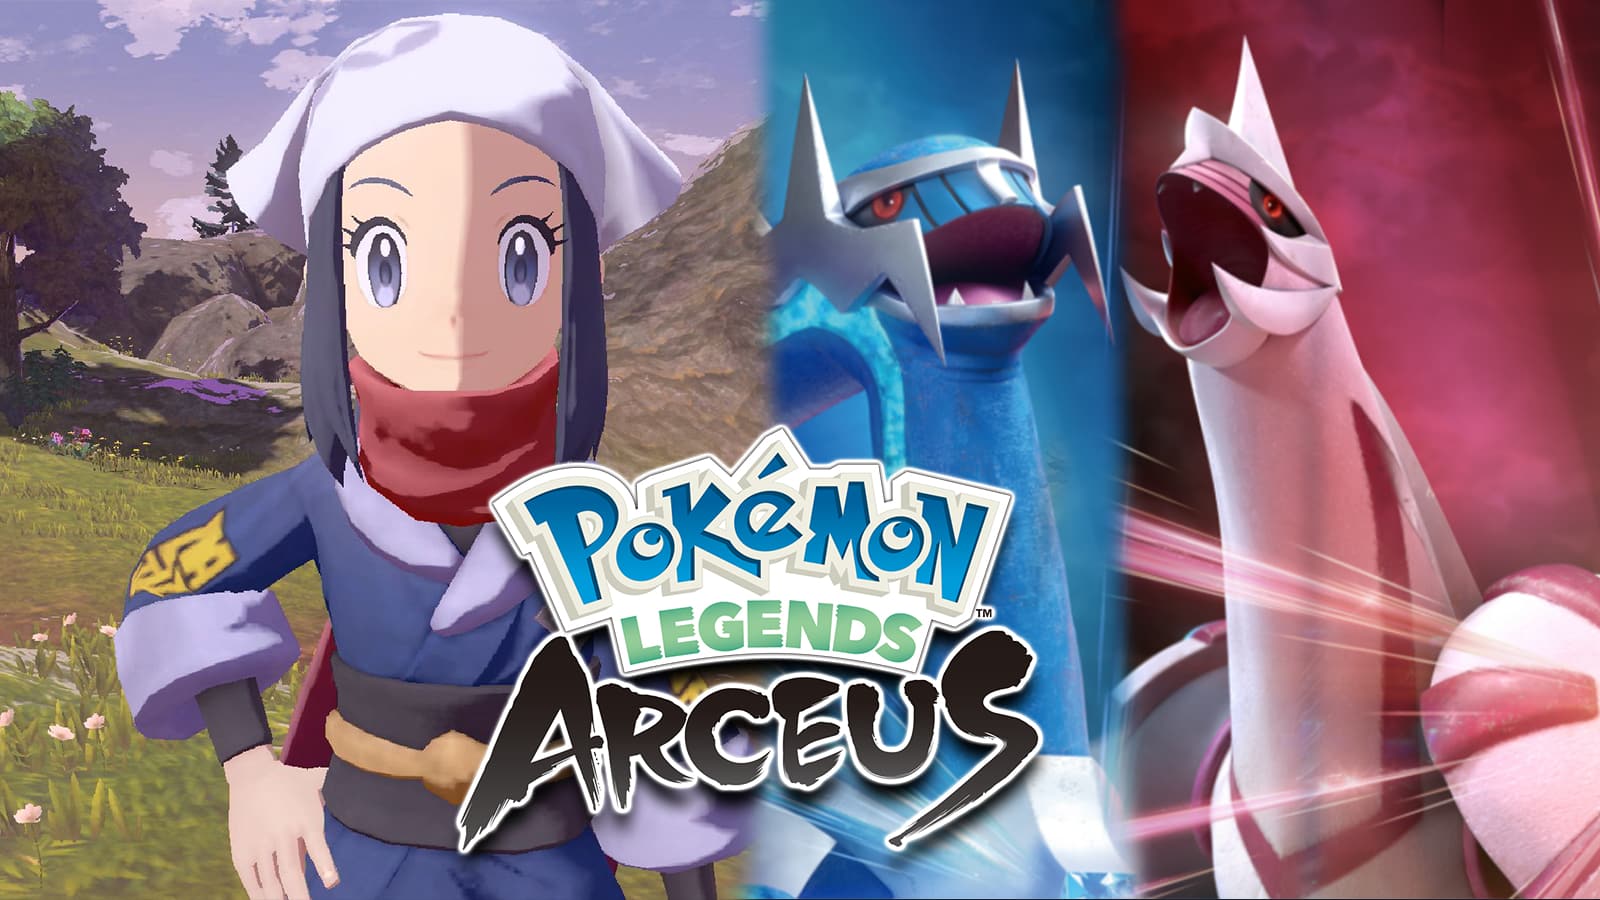 Latest Pokemon GO leaks hint at Arceus debut